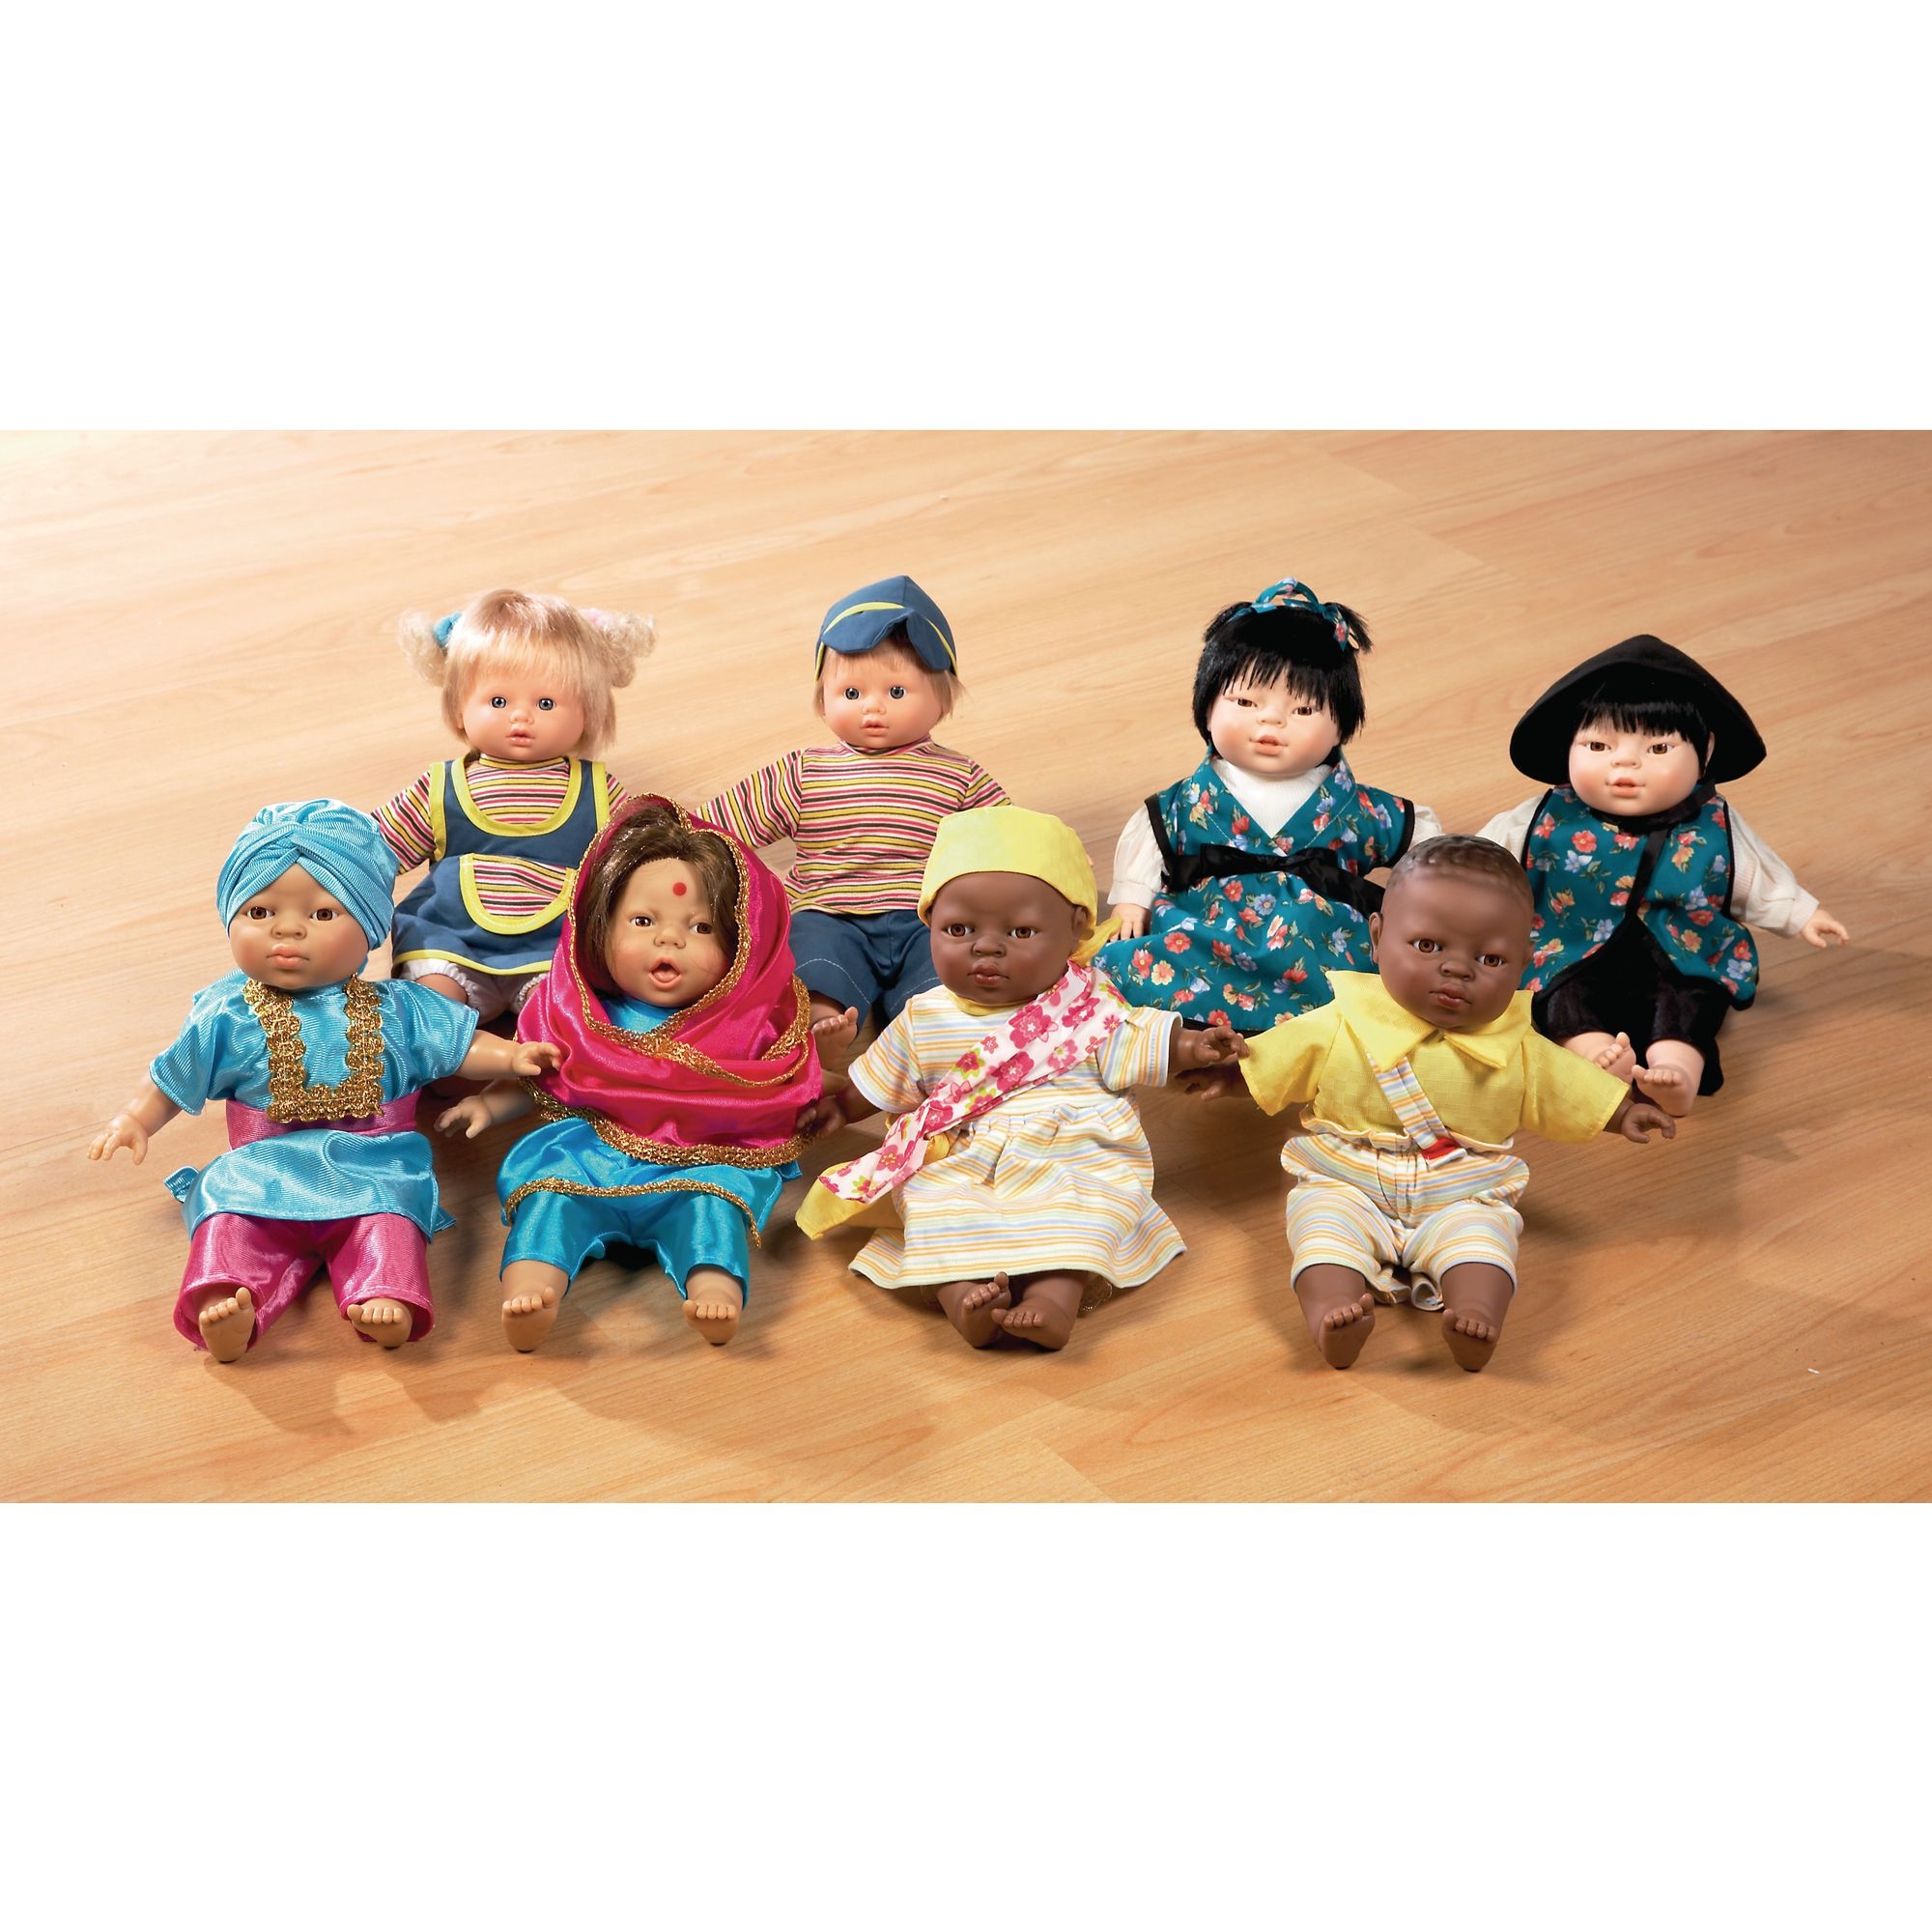 Children of the World Soft-bodied Dolls: Jamilla and Zane